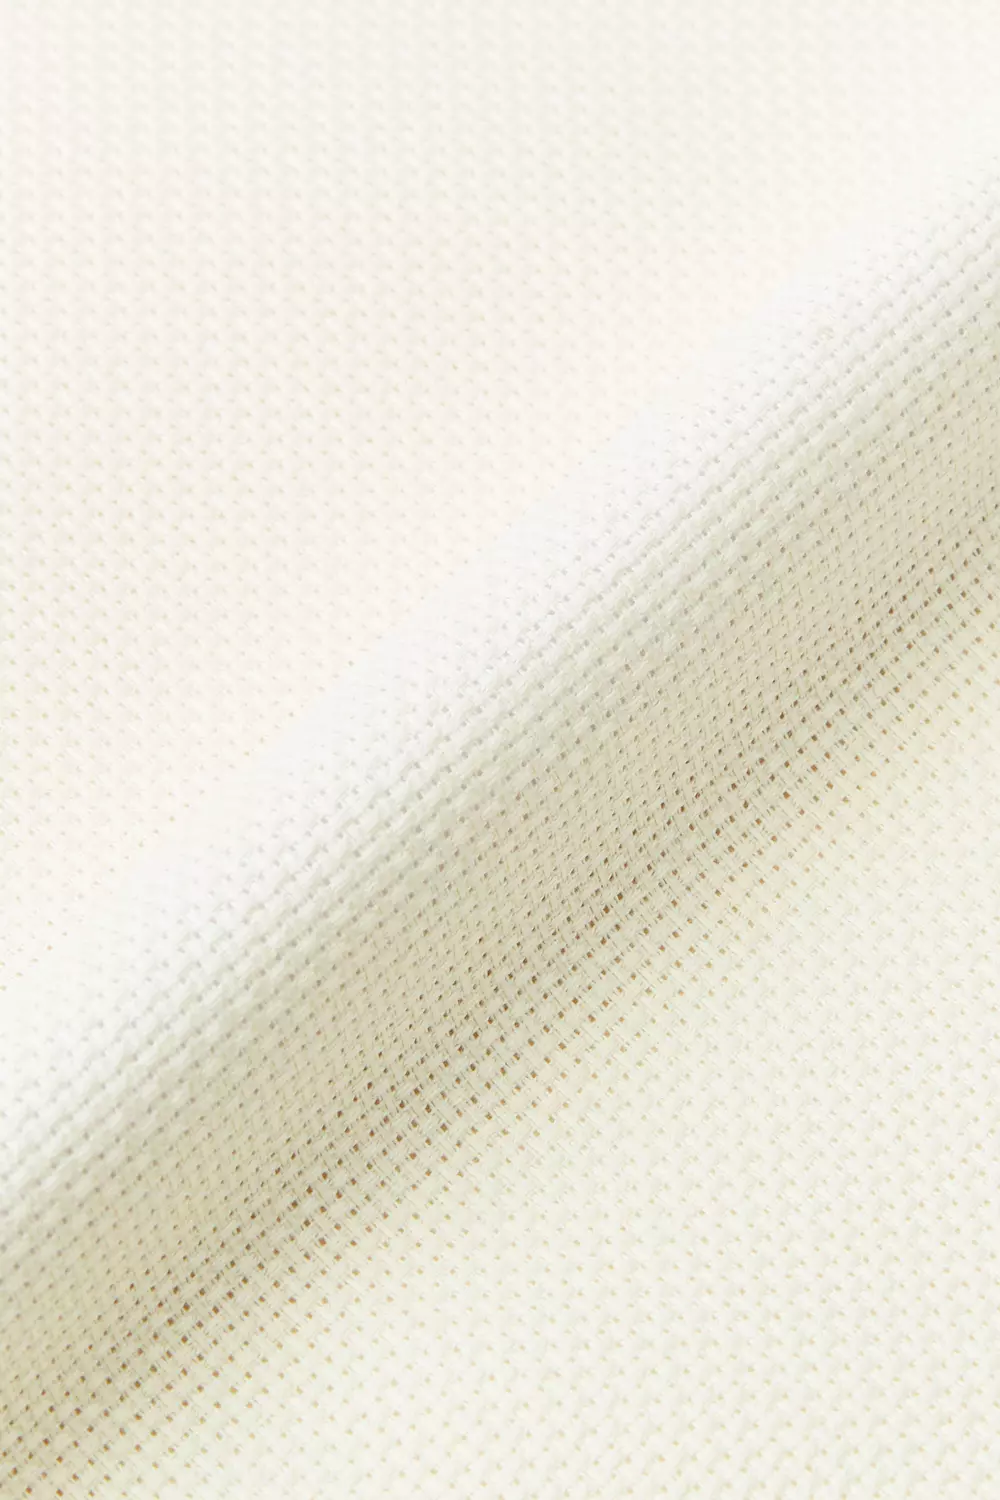 16 Count Cross Stitch Fabric Embroidery Aida Cloth, White, 59W x 39L